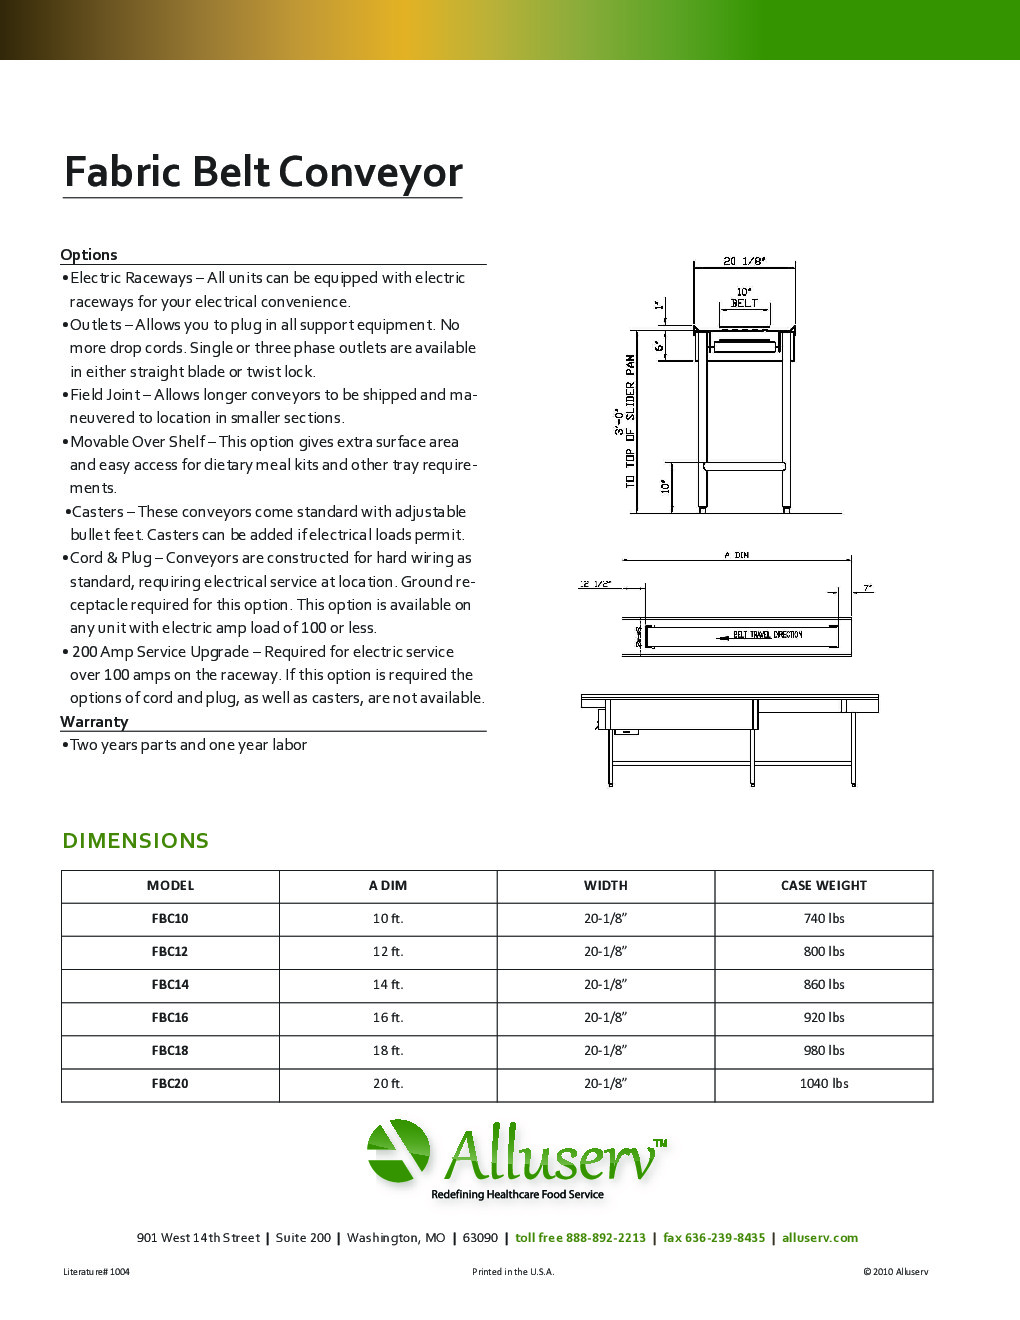 Alluserv FBC12 Tray Make-Up Conveyor